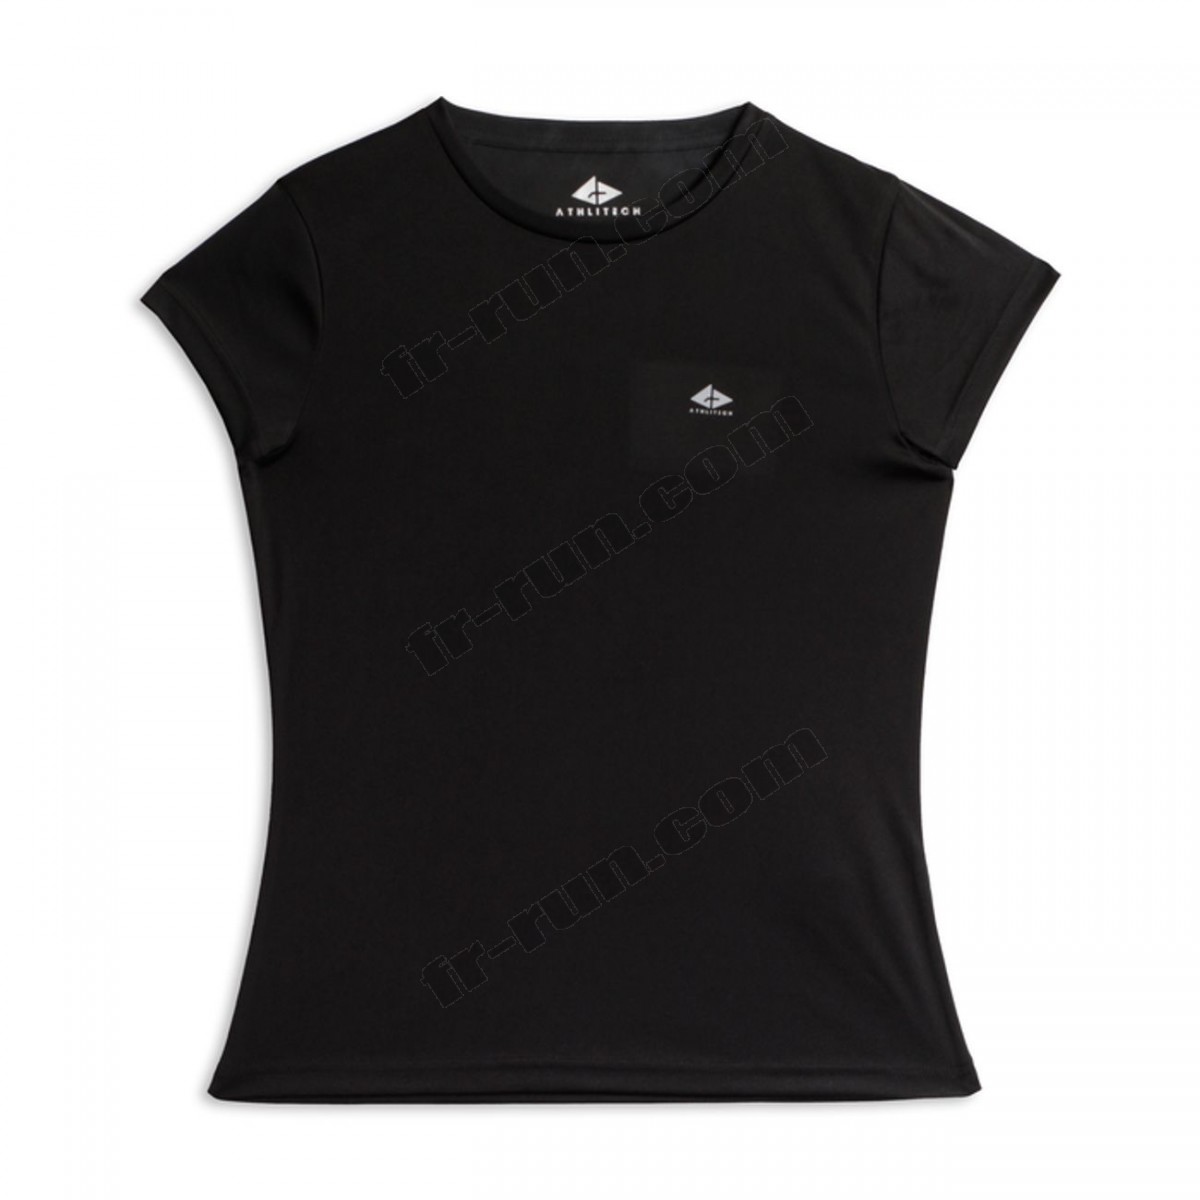 Athlitech/Tee Shirt MC running femme ATHLITECH GIA 50 √ Nouveau style √ Soldes - -4